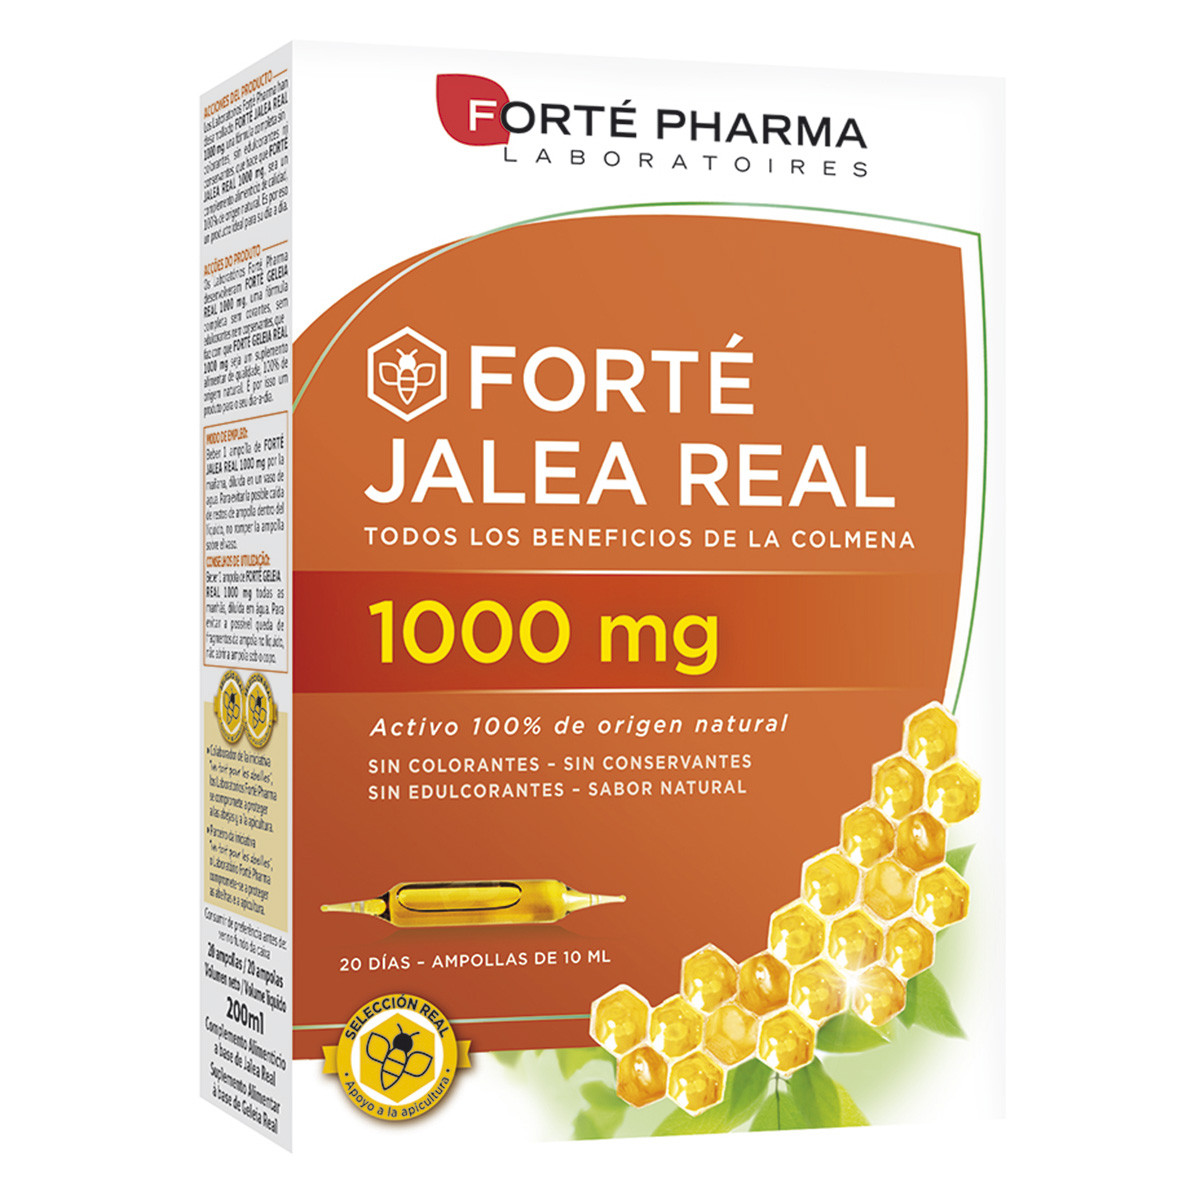 Imagen de Forte pharma jalea real 1000 mg 20 ampollas